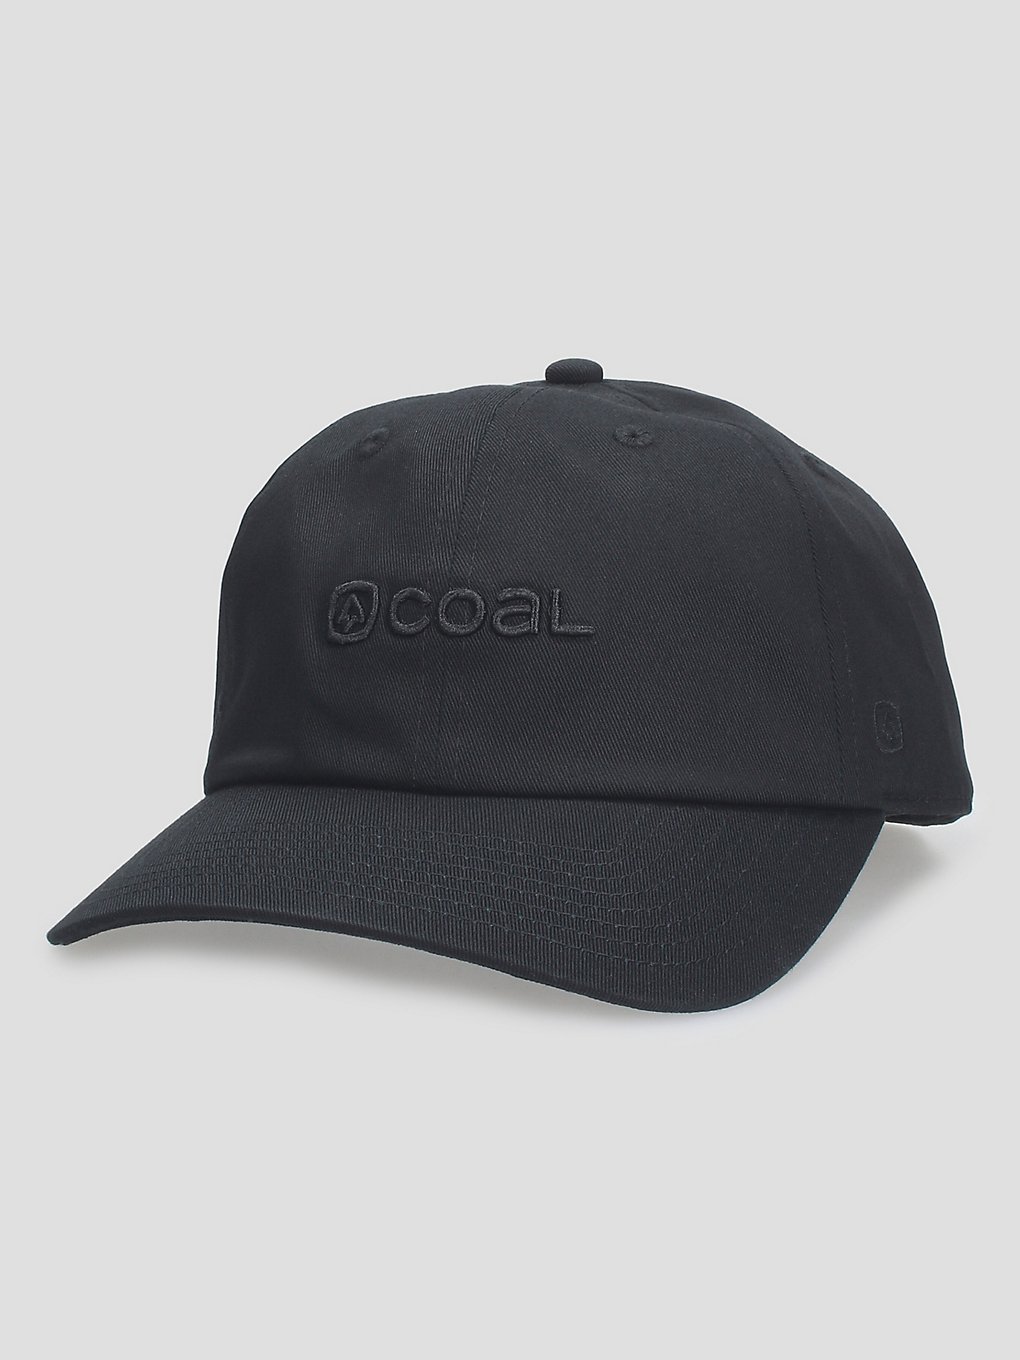 Coal The Encore Cap black kaufen